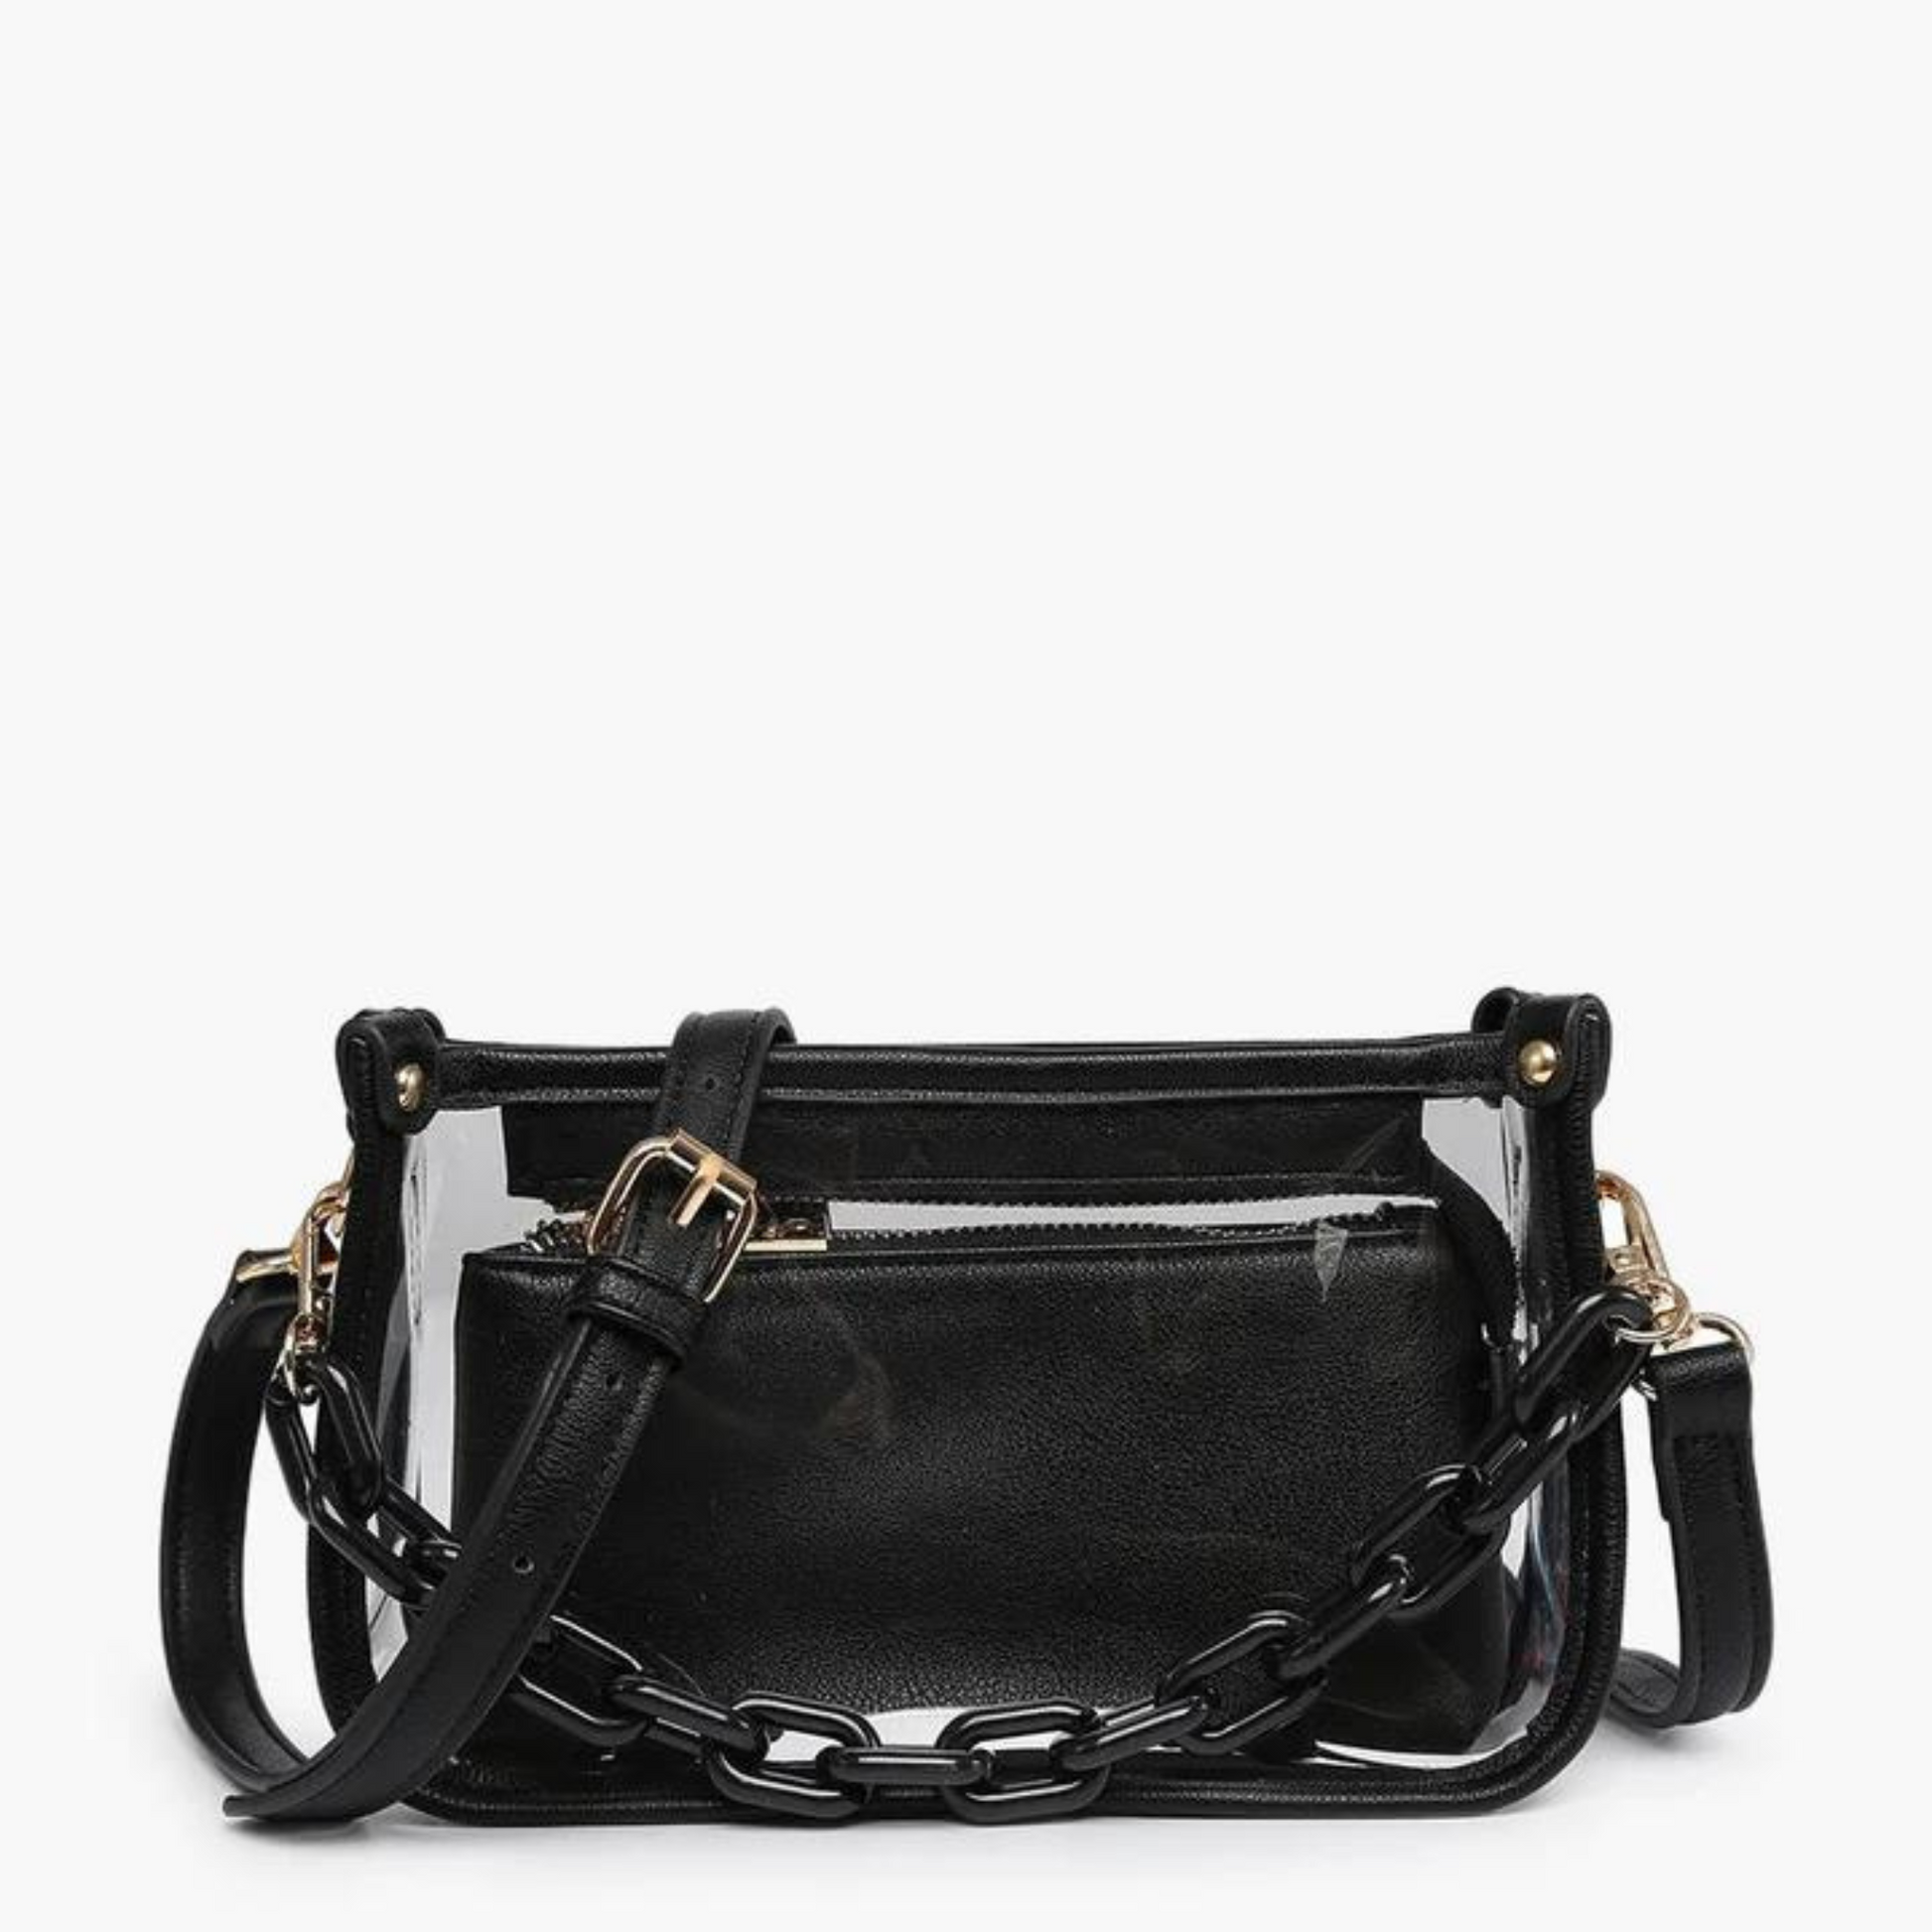 Jessica clear crossbody purse in black